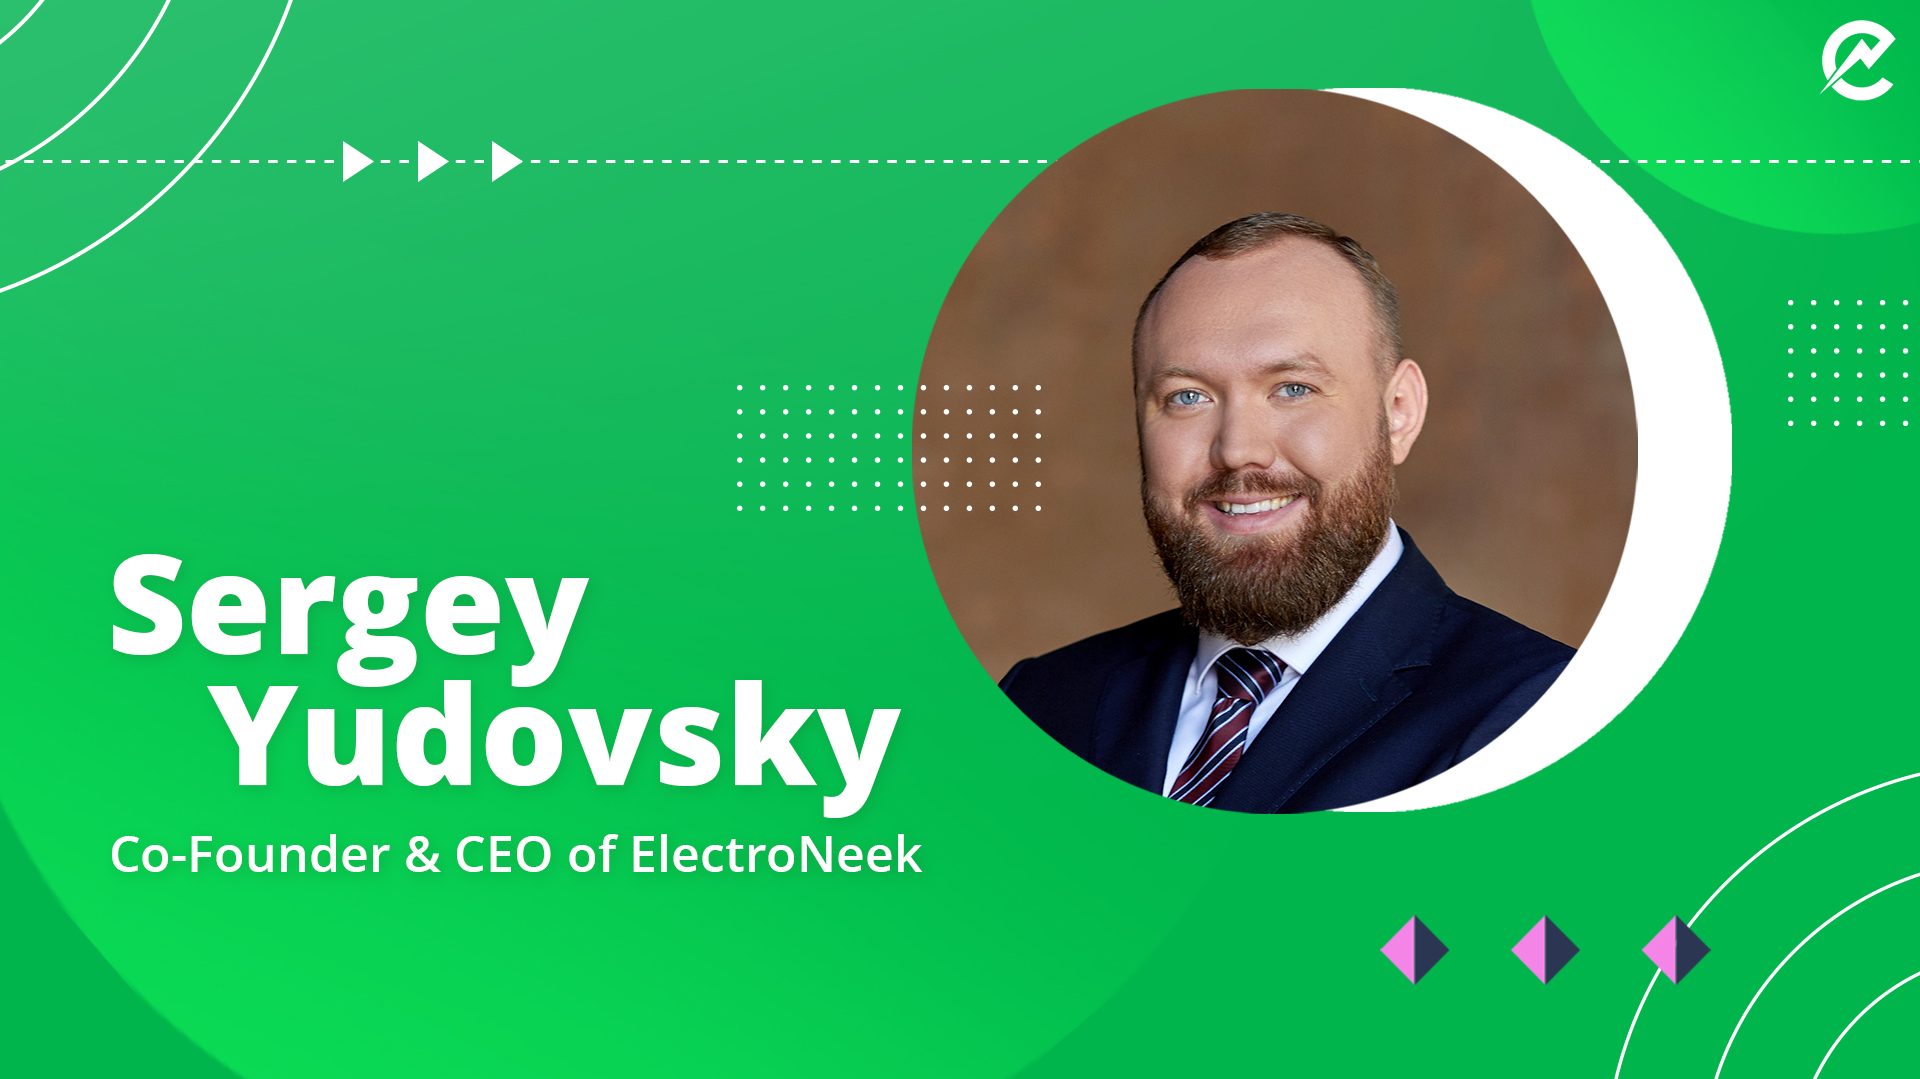 Sergey Yudovsky, Co-Founder & CEO of ElectroNeek